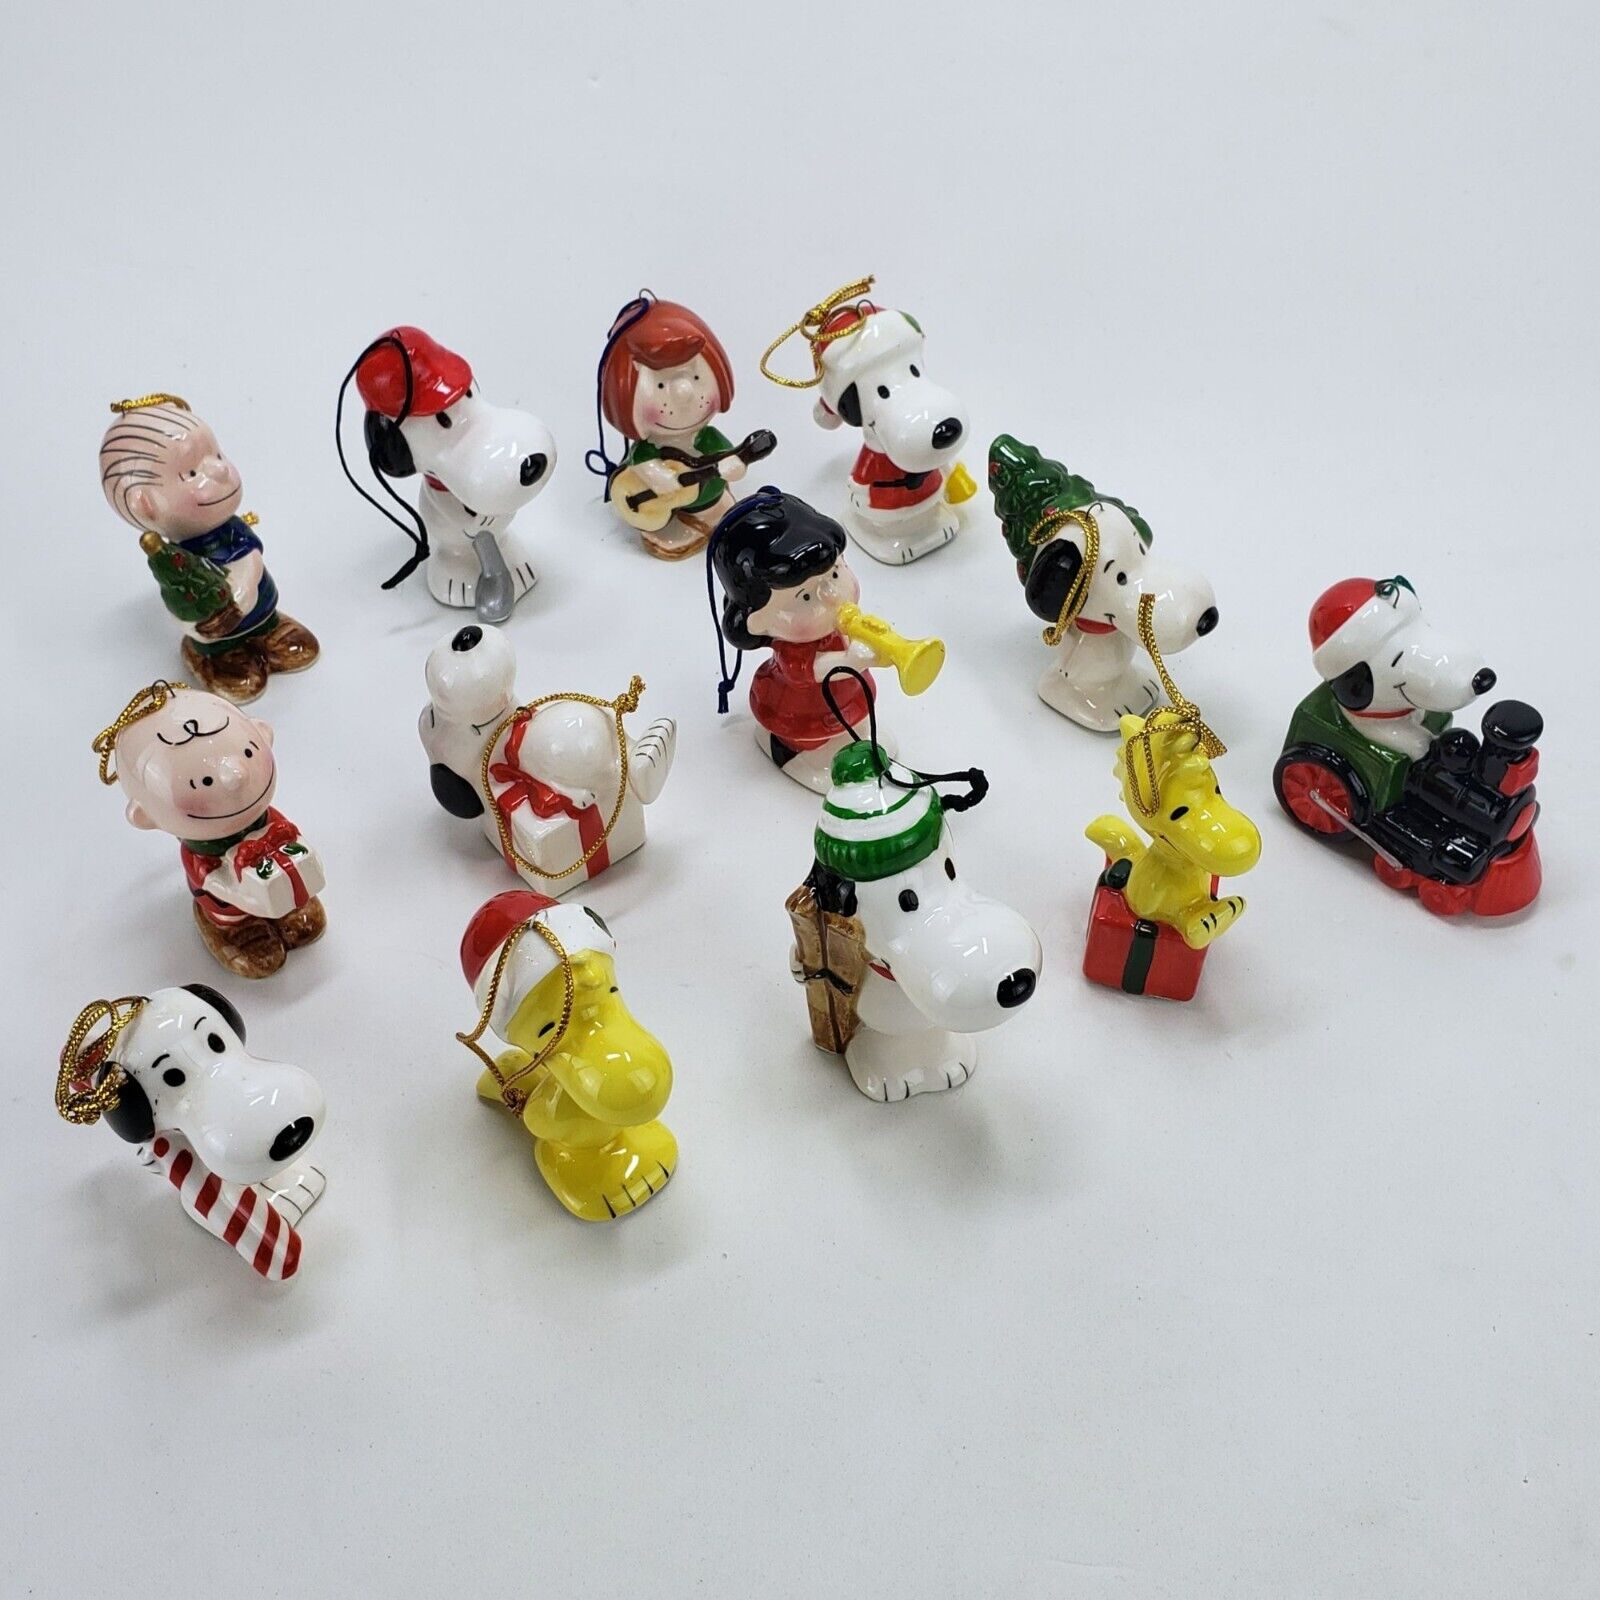 13 Vintage Lot of Peanuts Snoopy Ceramic Christmas Ornaments 1950-1966 Japan